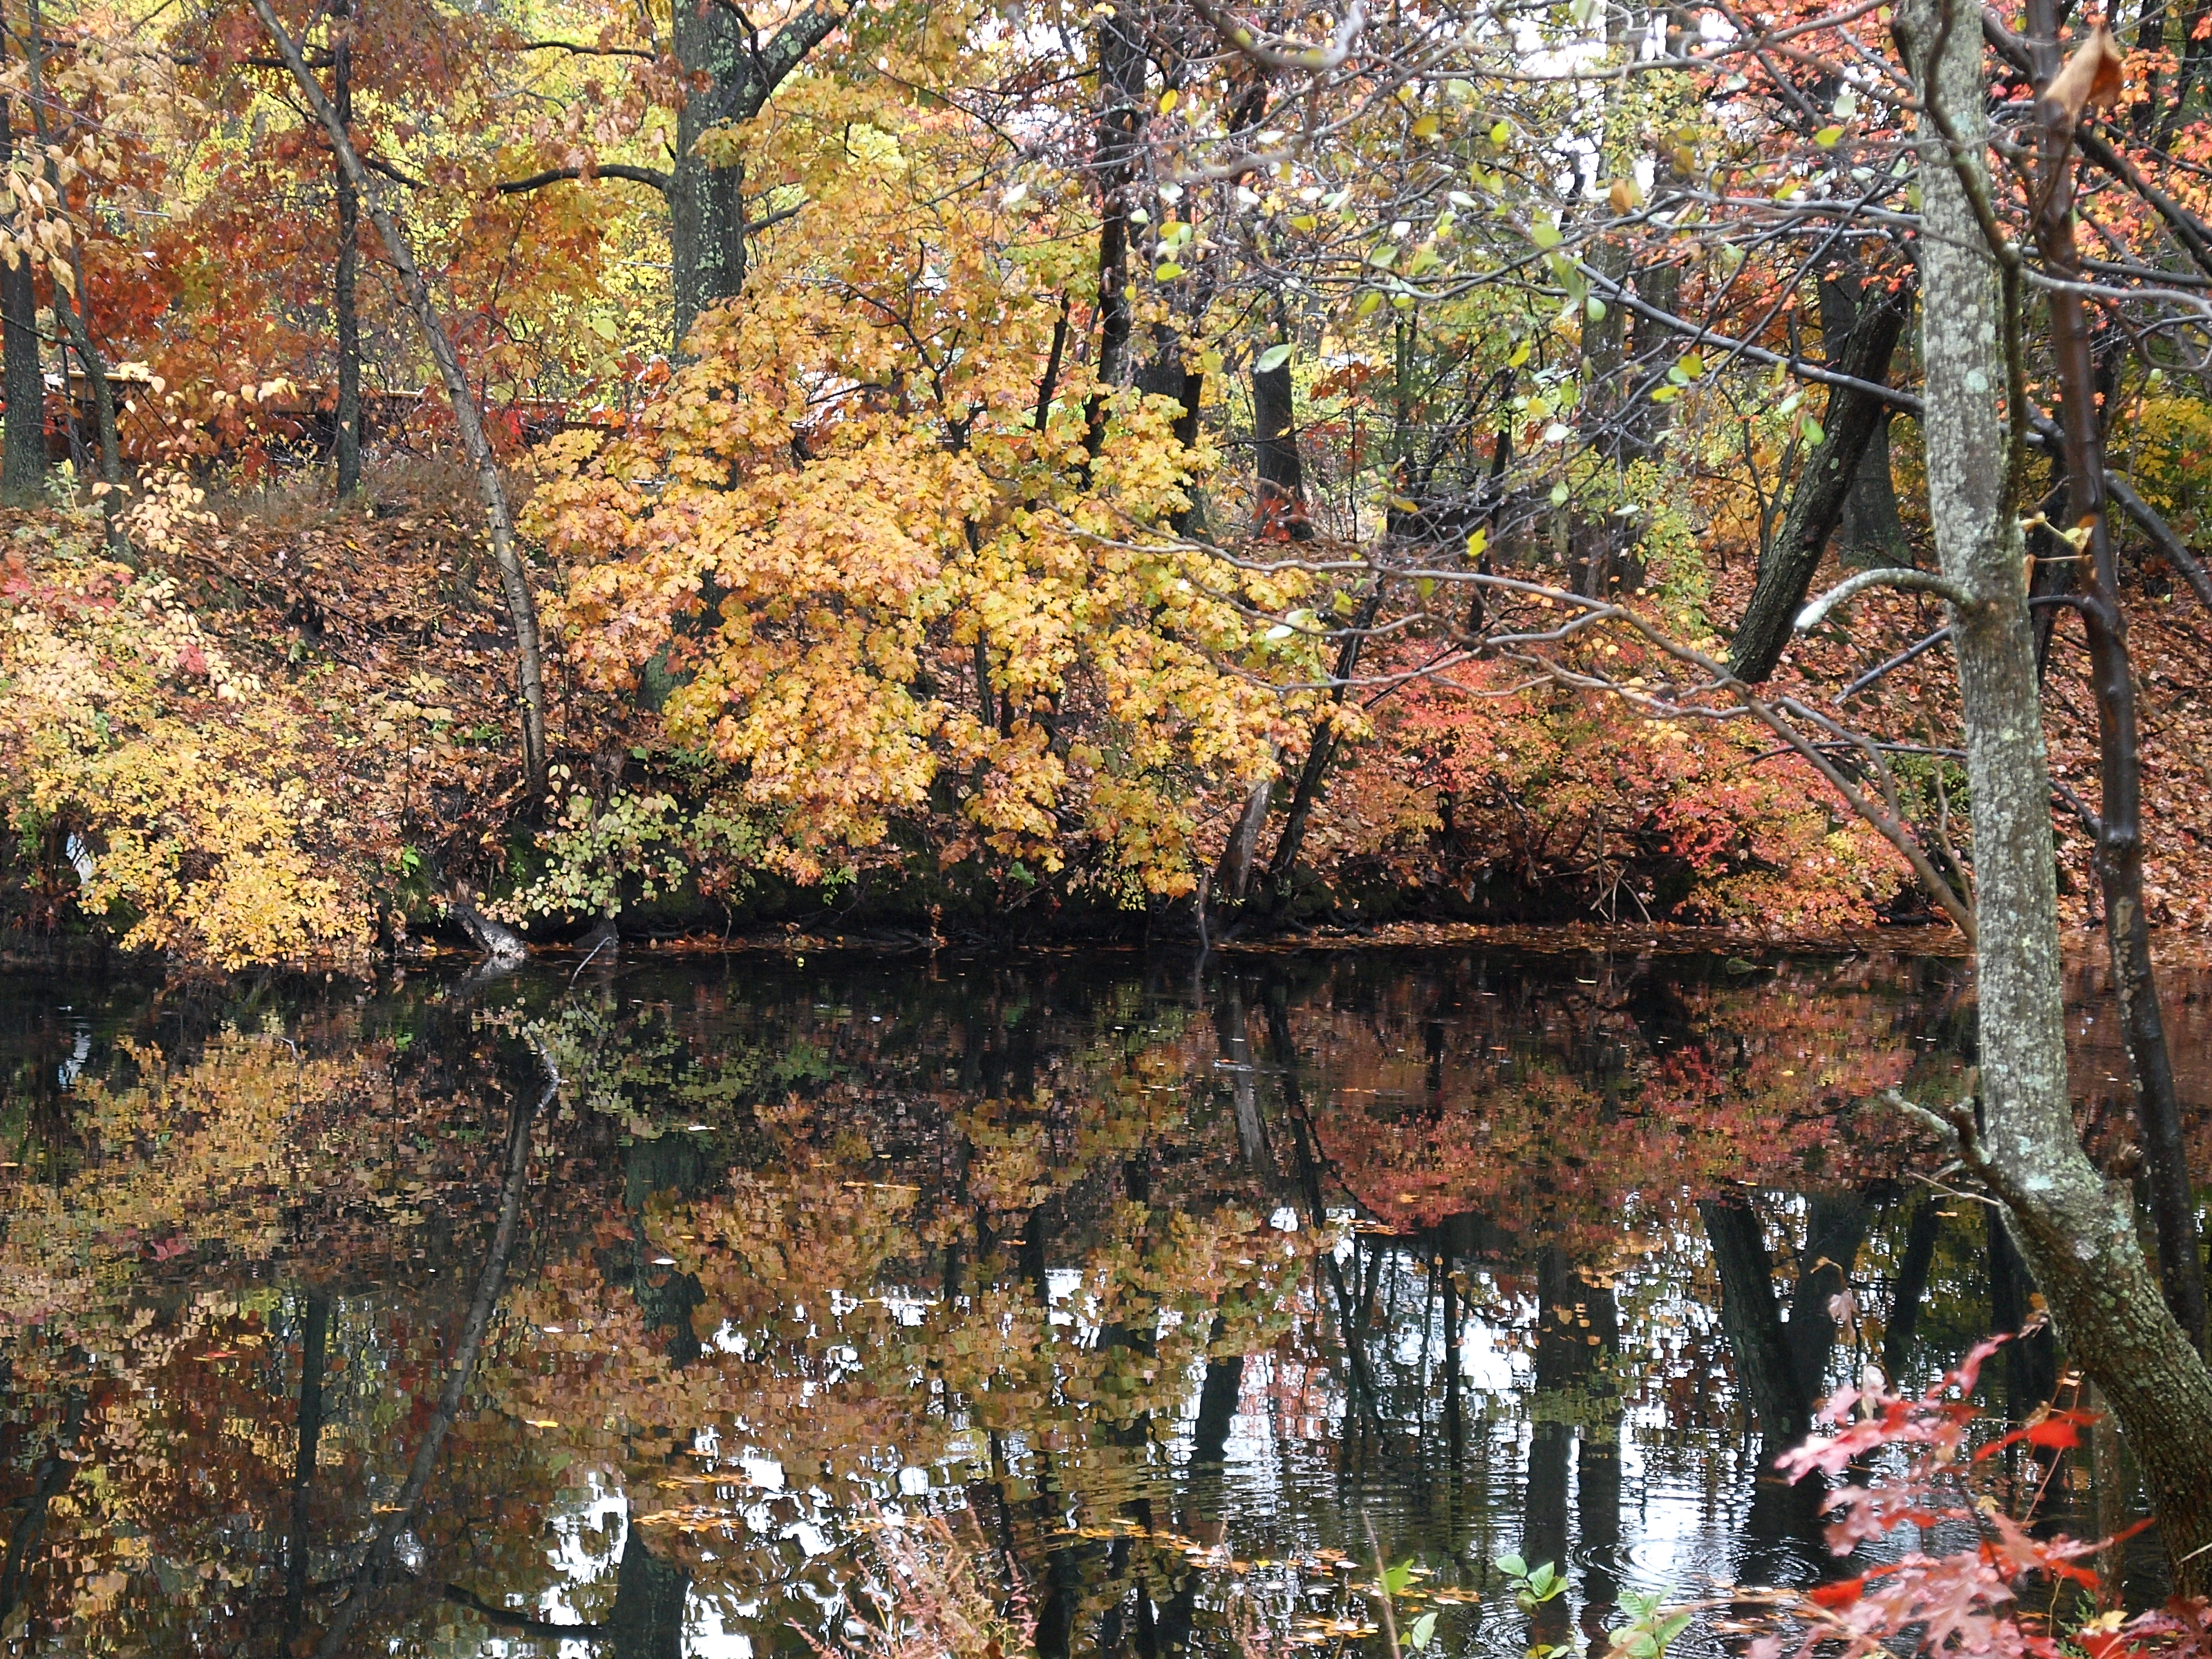 Fall pond